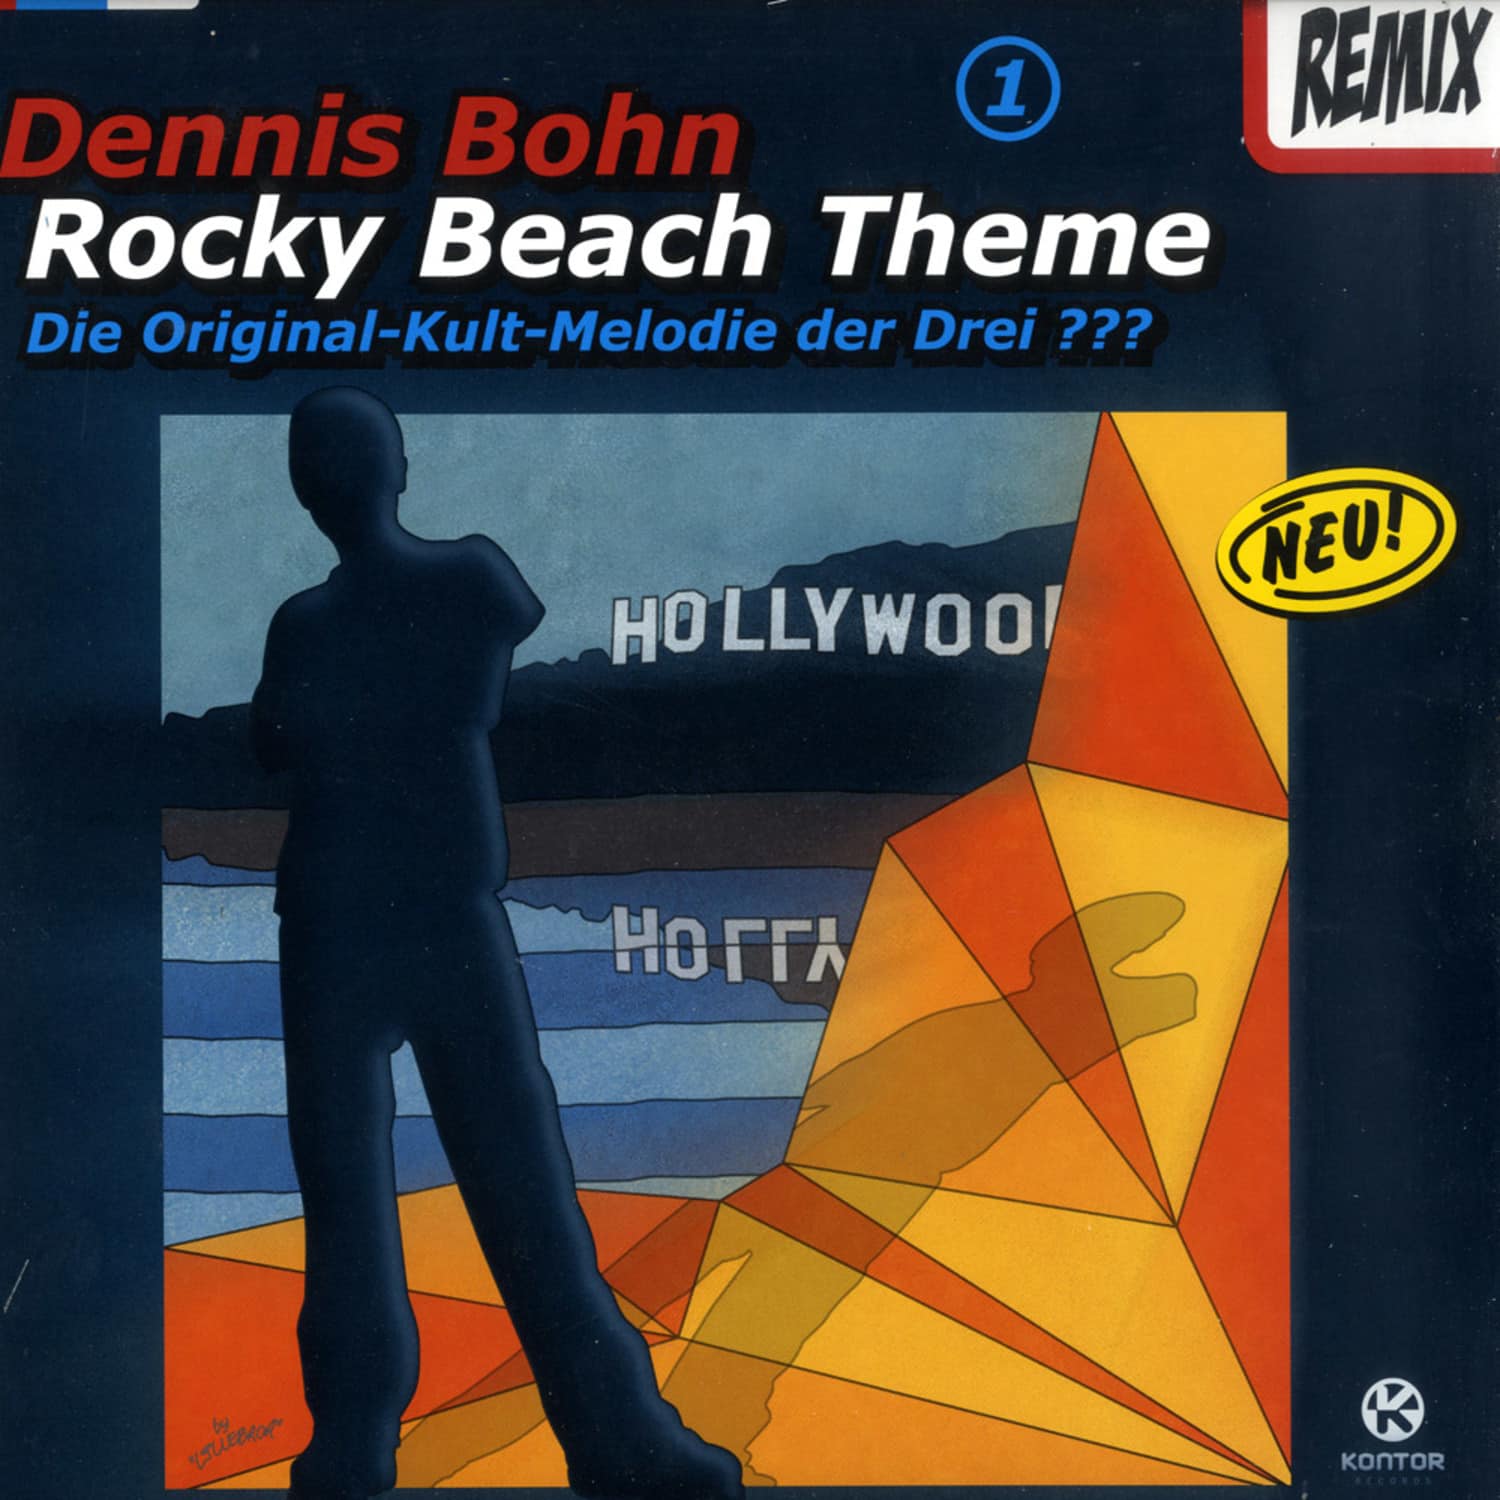 Dennis Bohn - ROCKY BEACH THEME